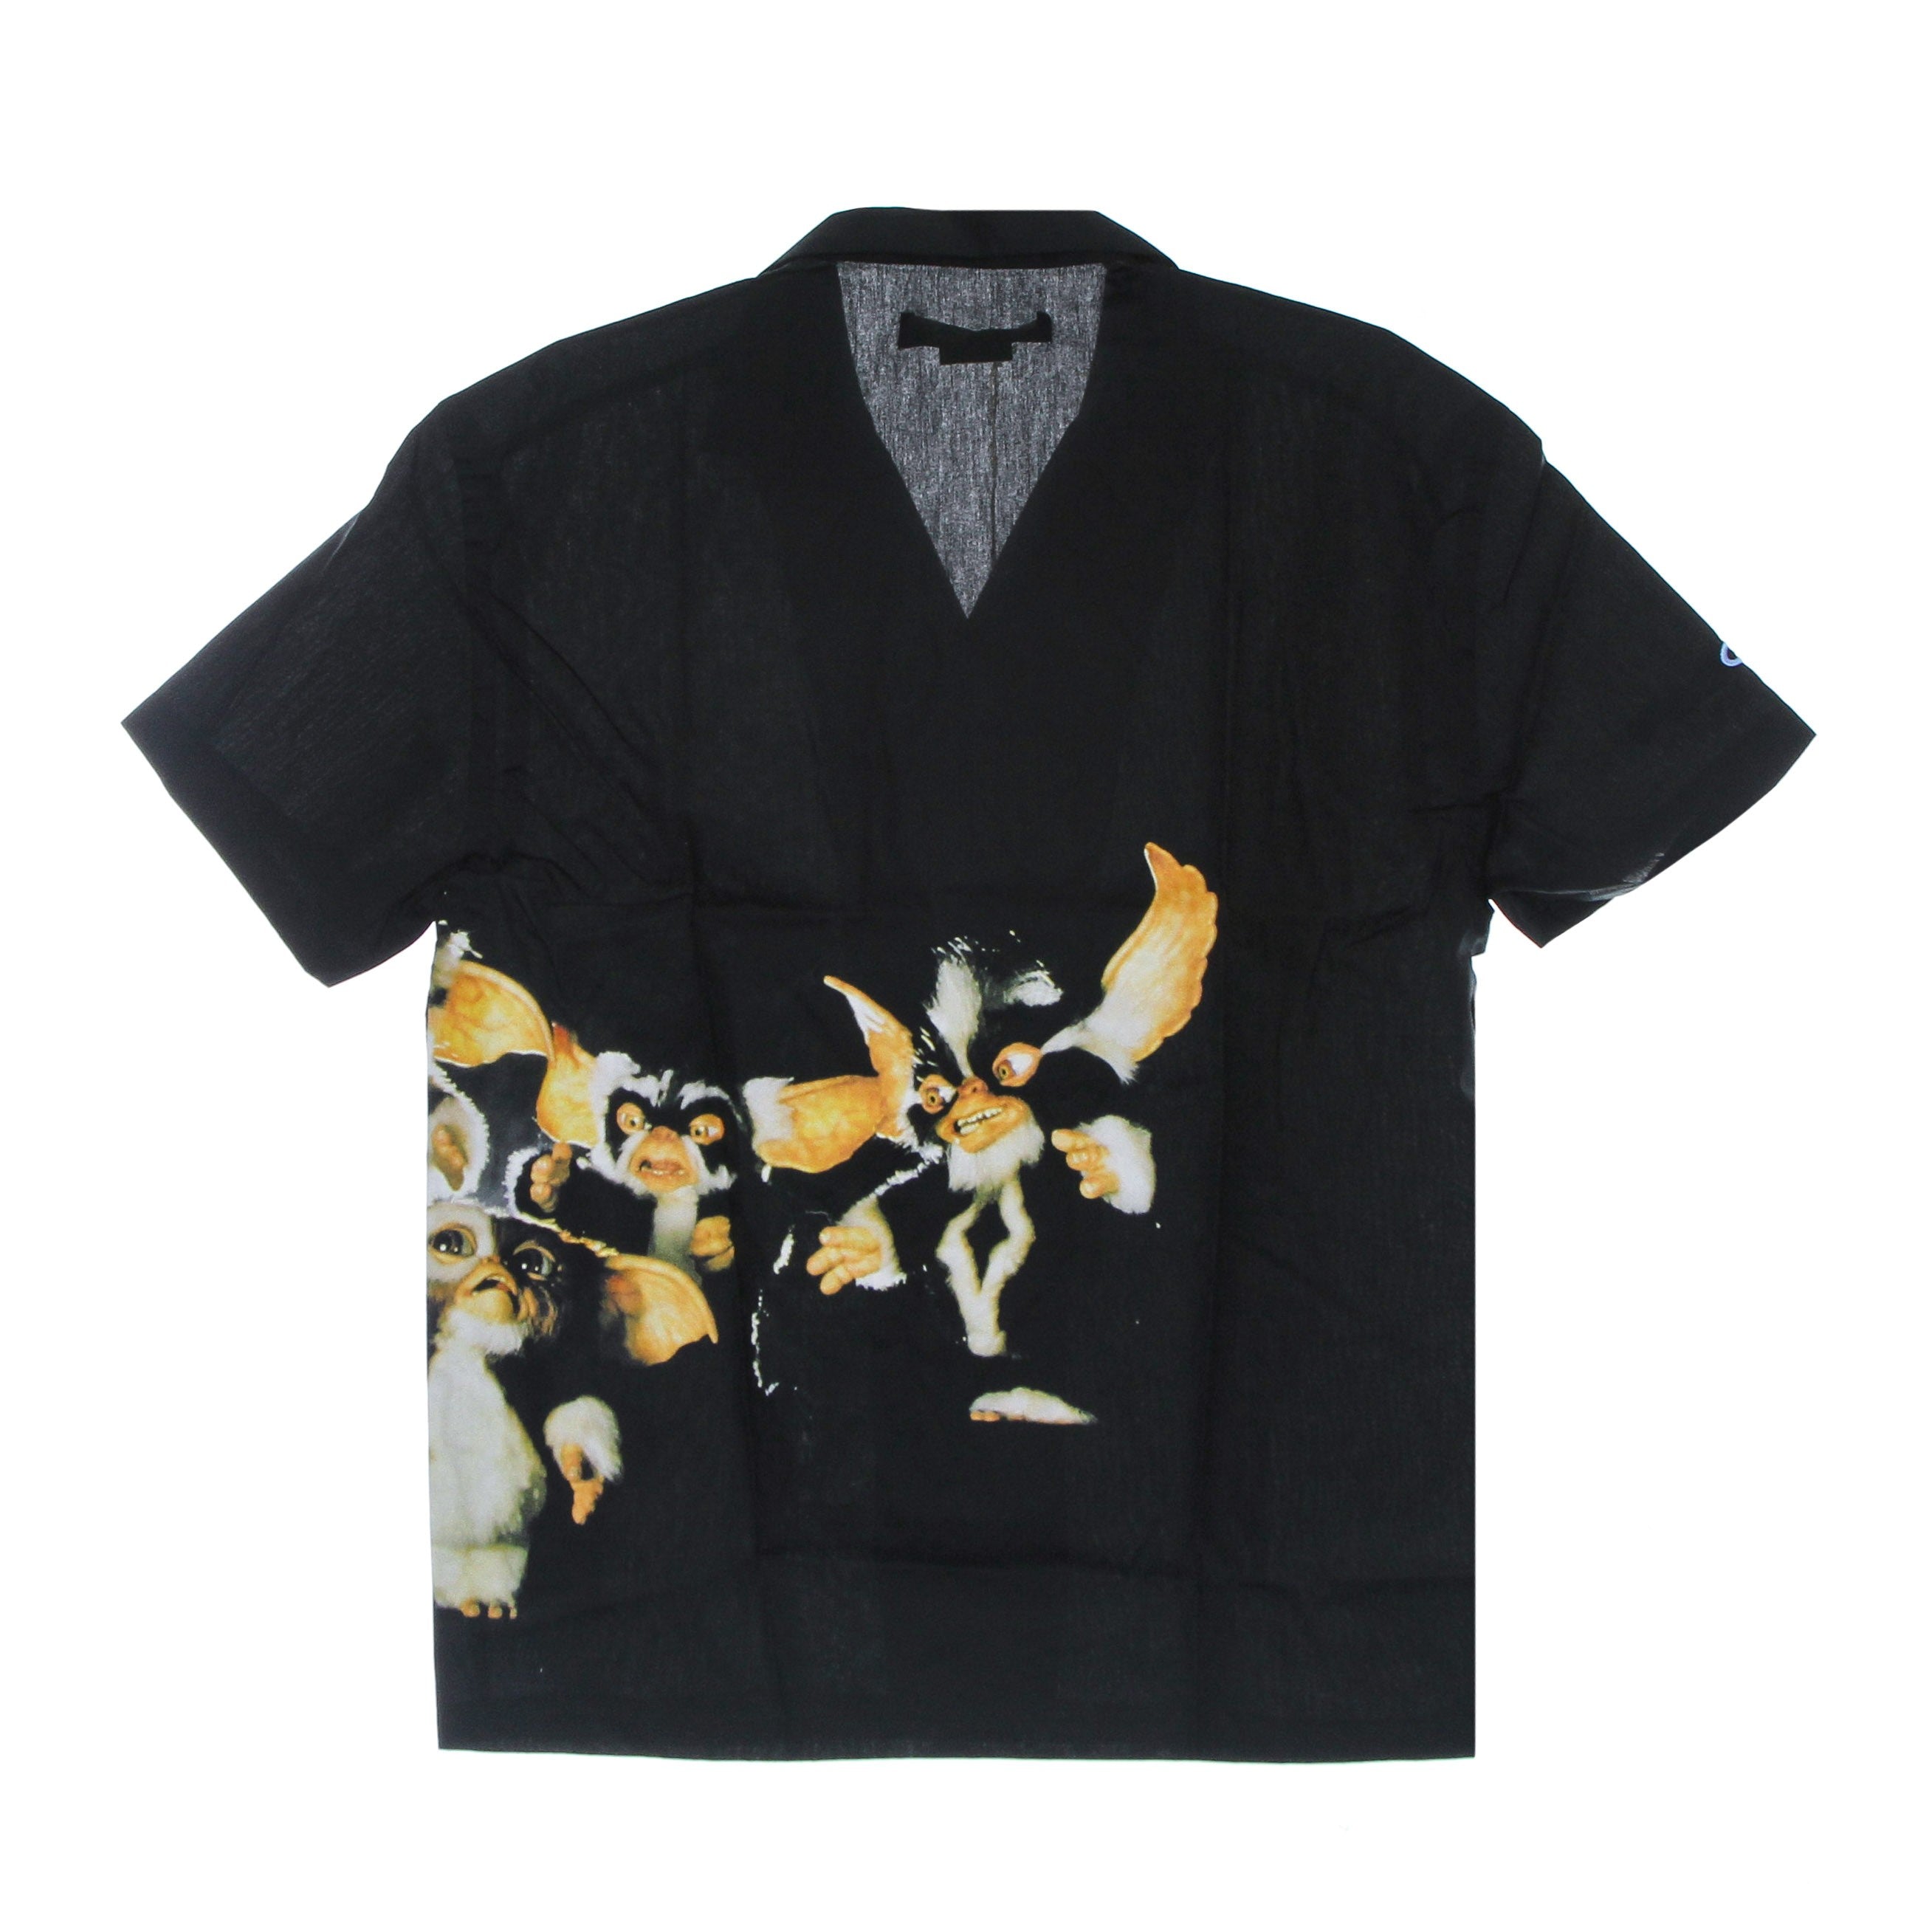 Family Shirt X Gremlins Black Men's Short Sleeve Shirt